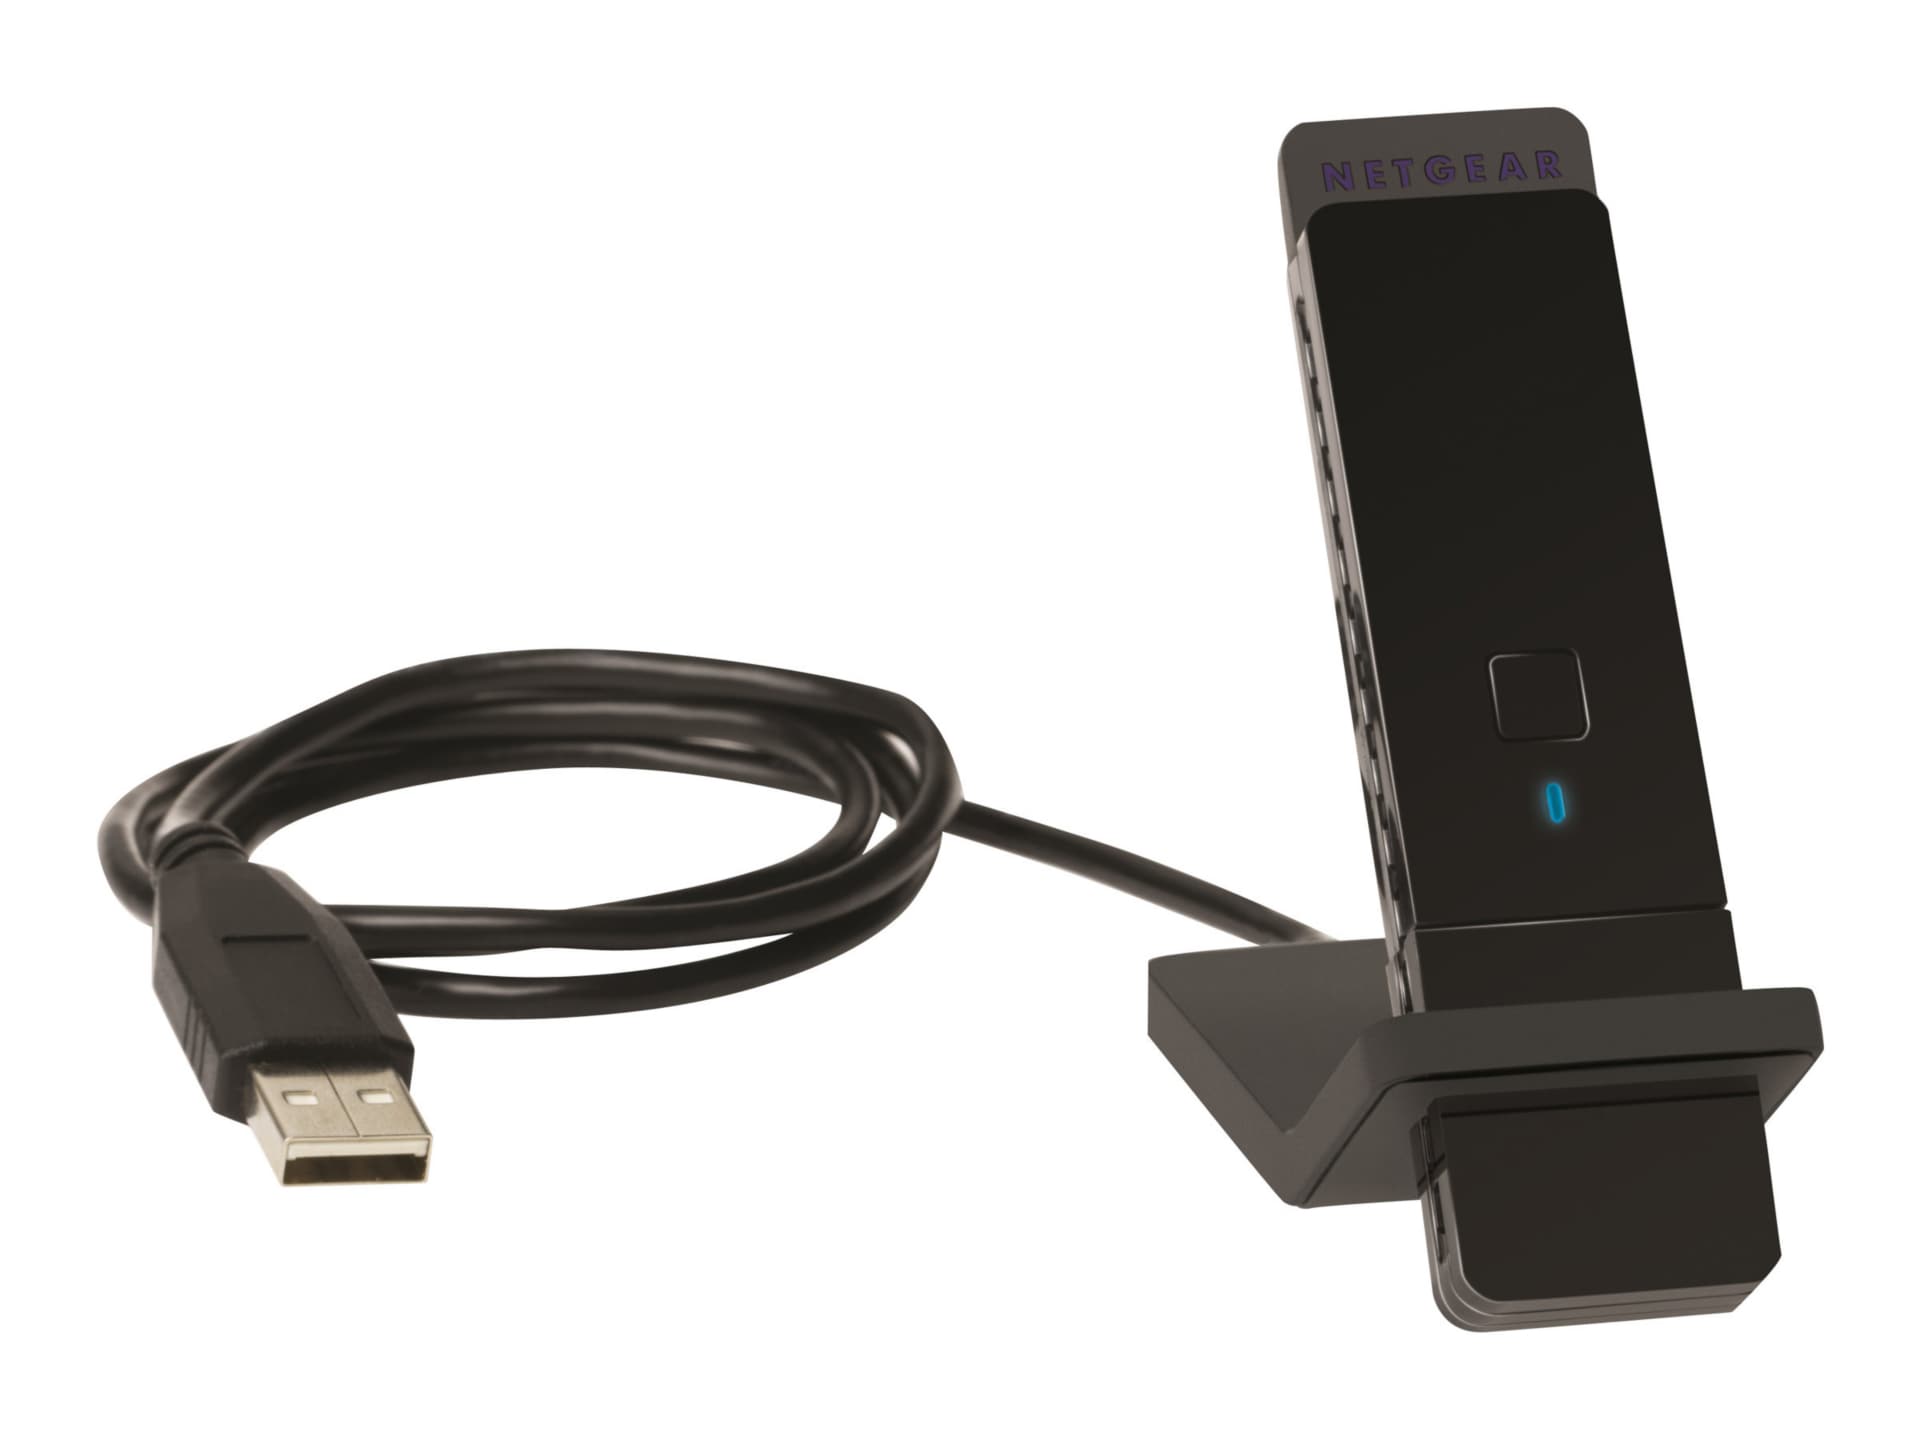 NETGEAR N300 WiFi USB Adapter (WNA3100-100ENS)